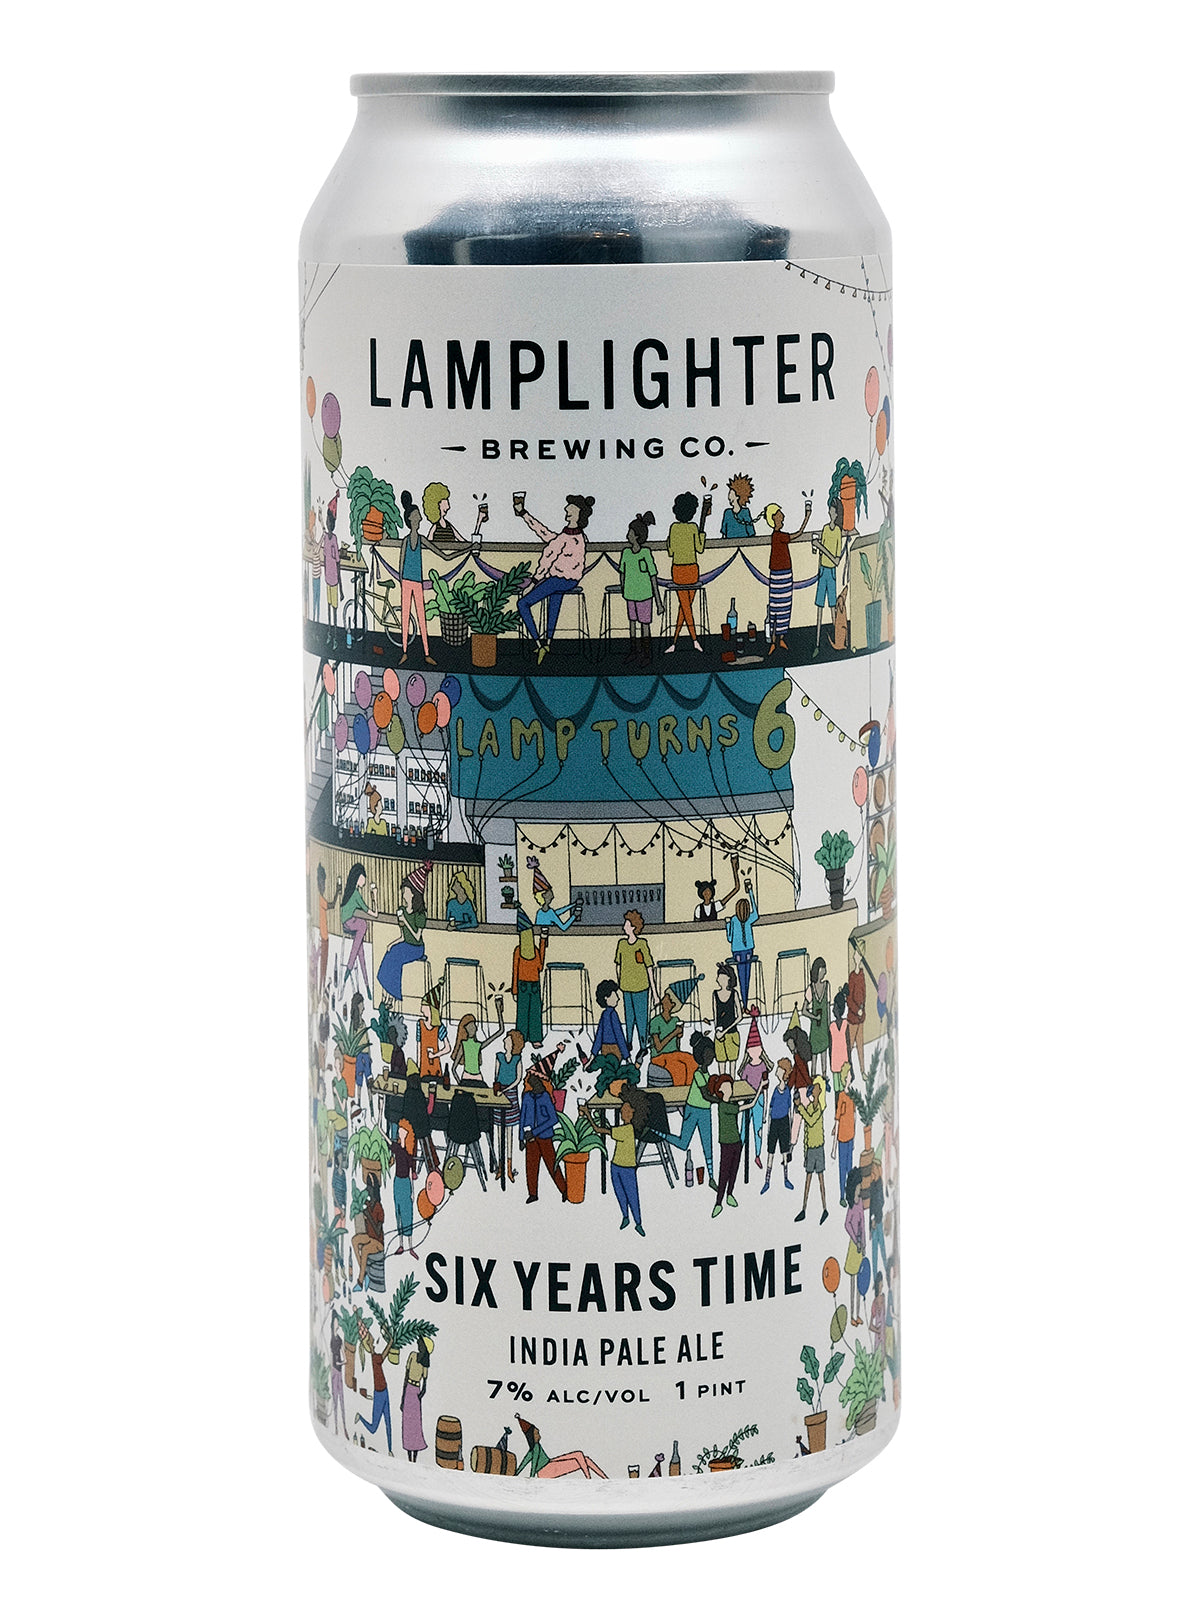 Lamplighter Brewing Co "Six Years Time" DDH IPA (Cambridge, MA)